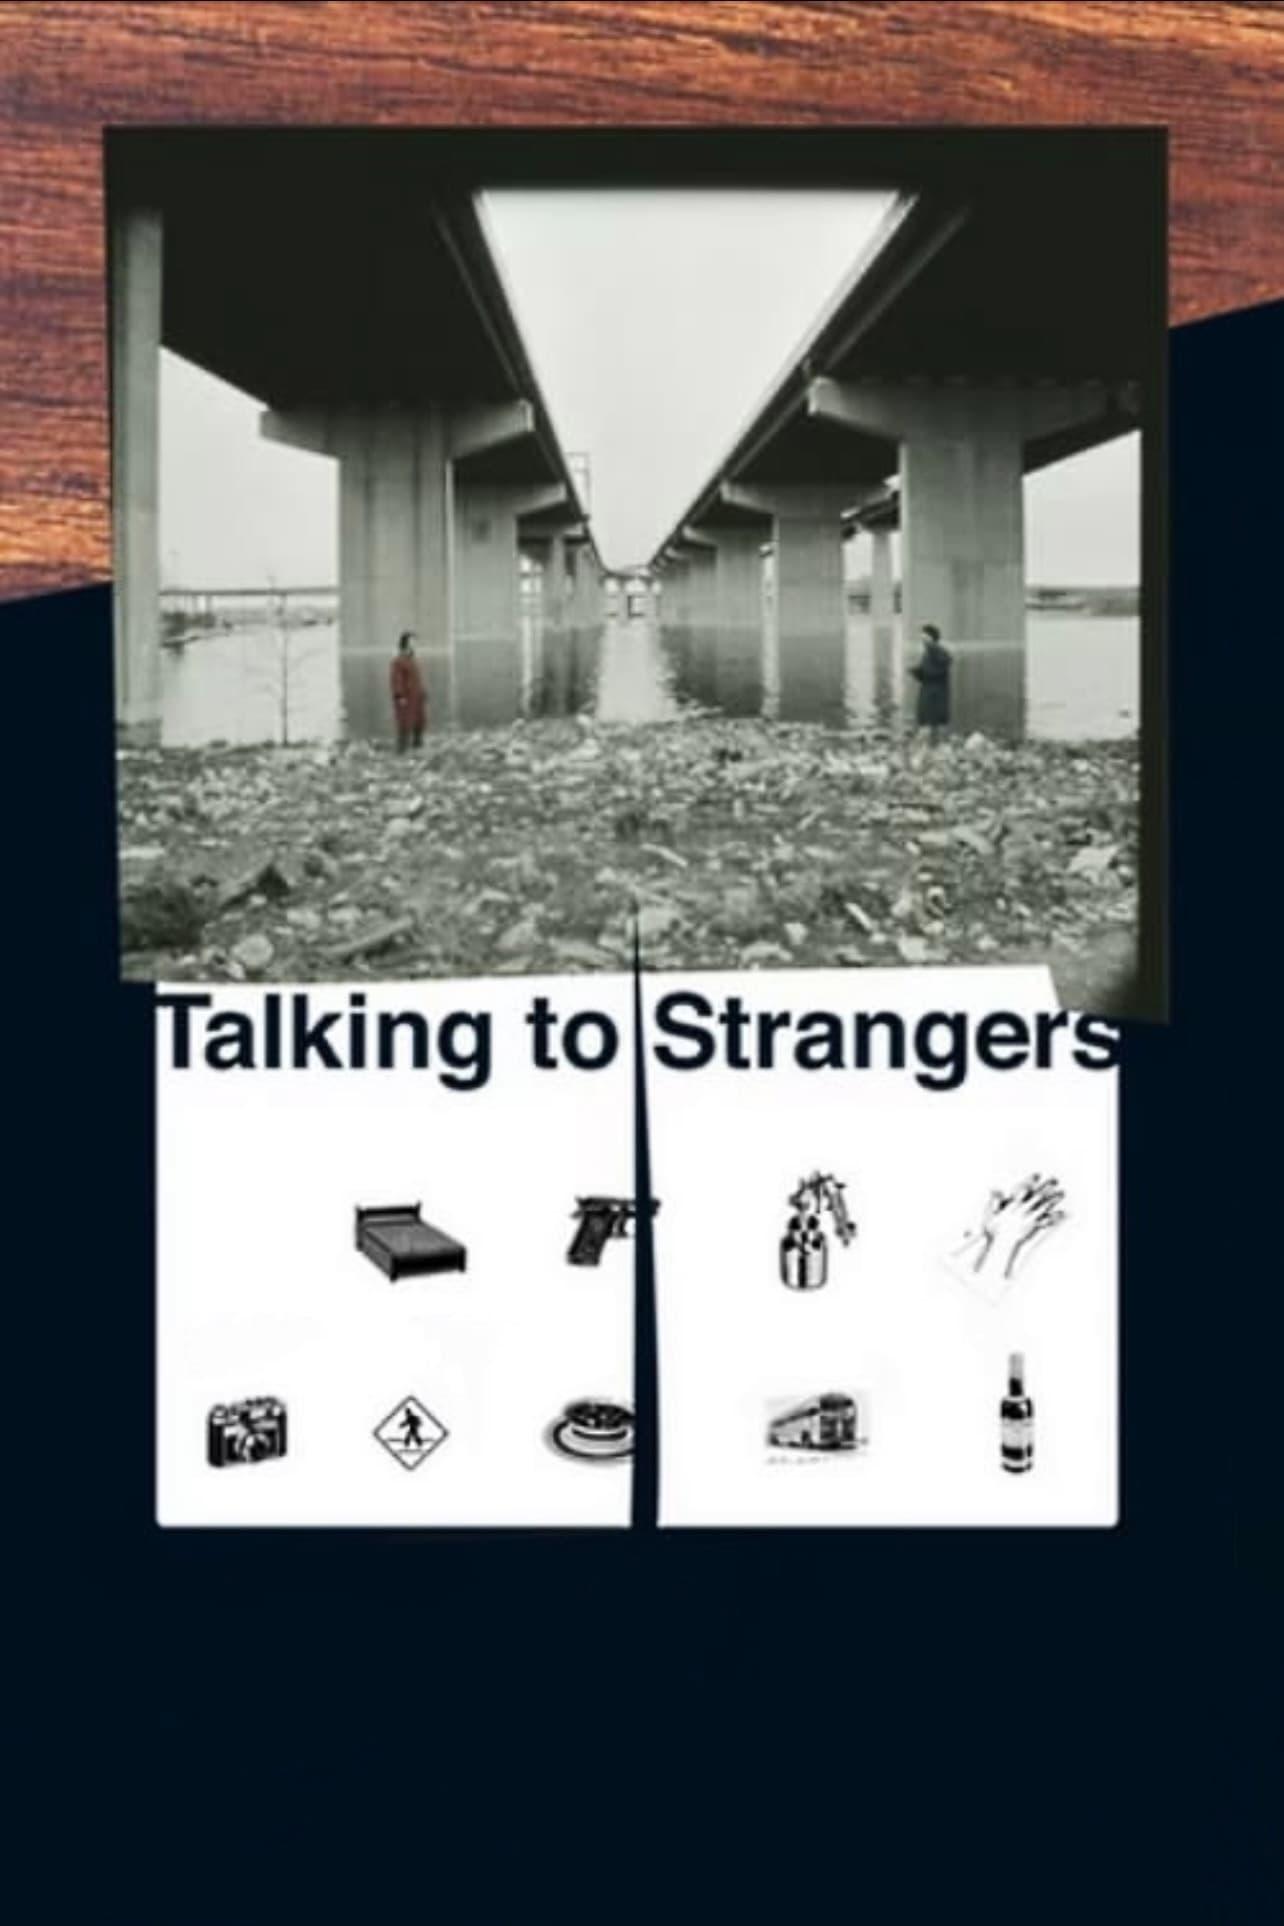 Talking to Strangers poster